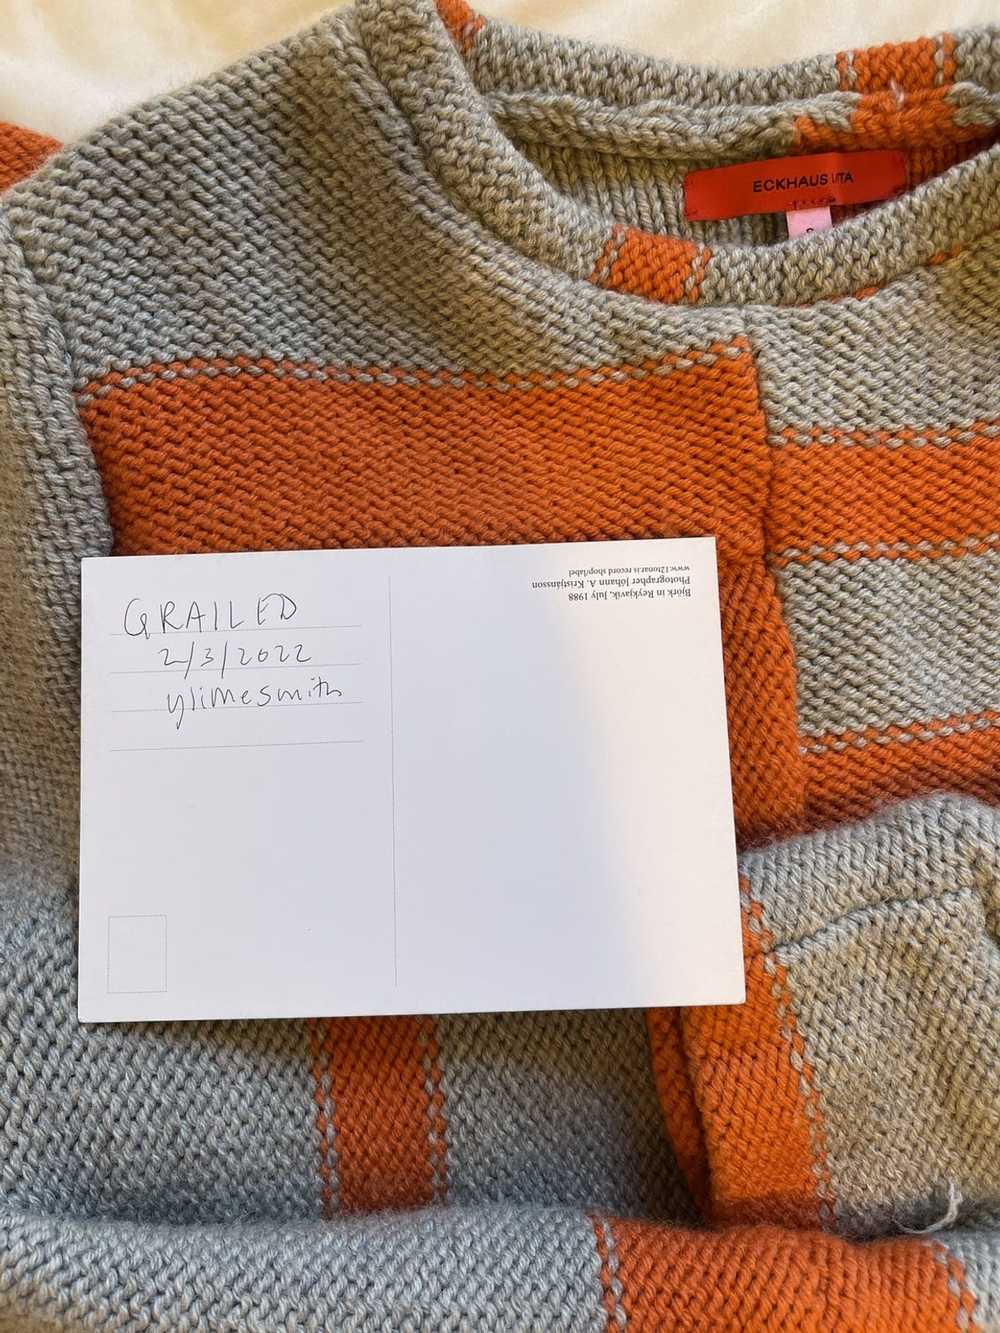 Eckhaus Latta Eckhaus Latta geometric knit sweater - image 5